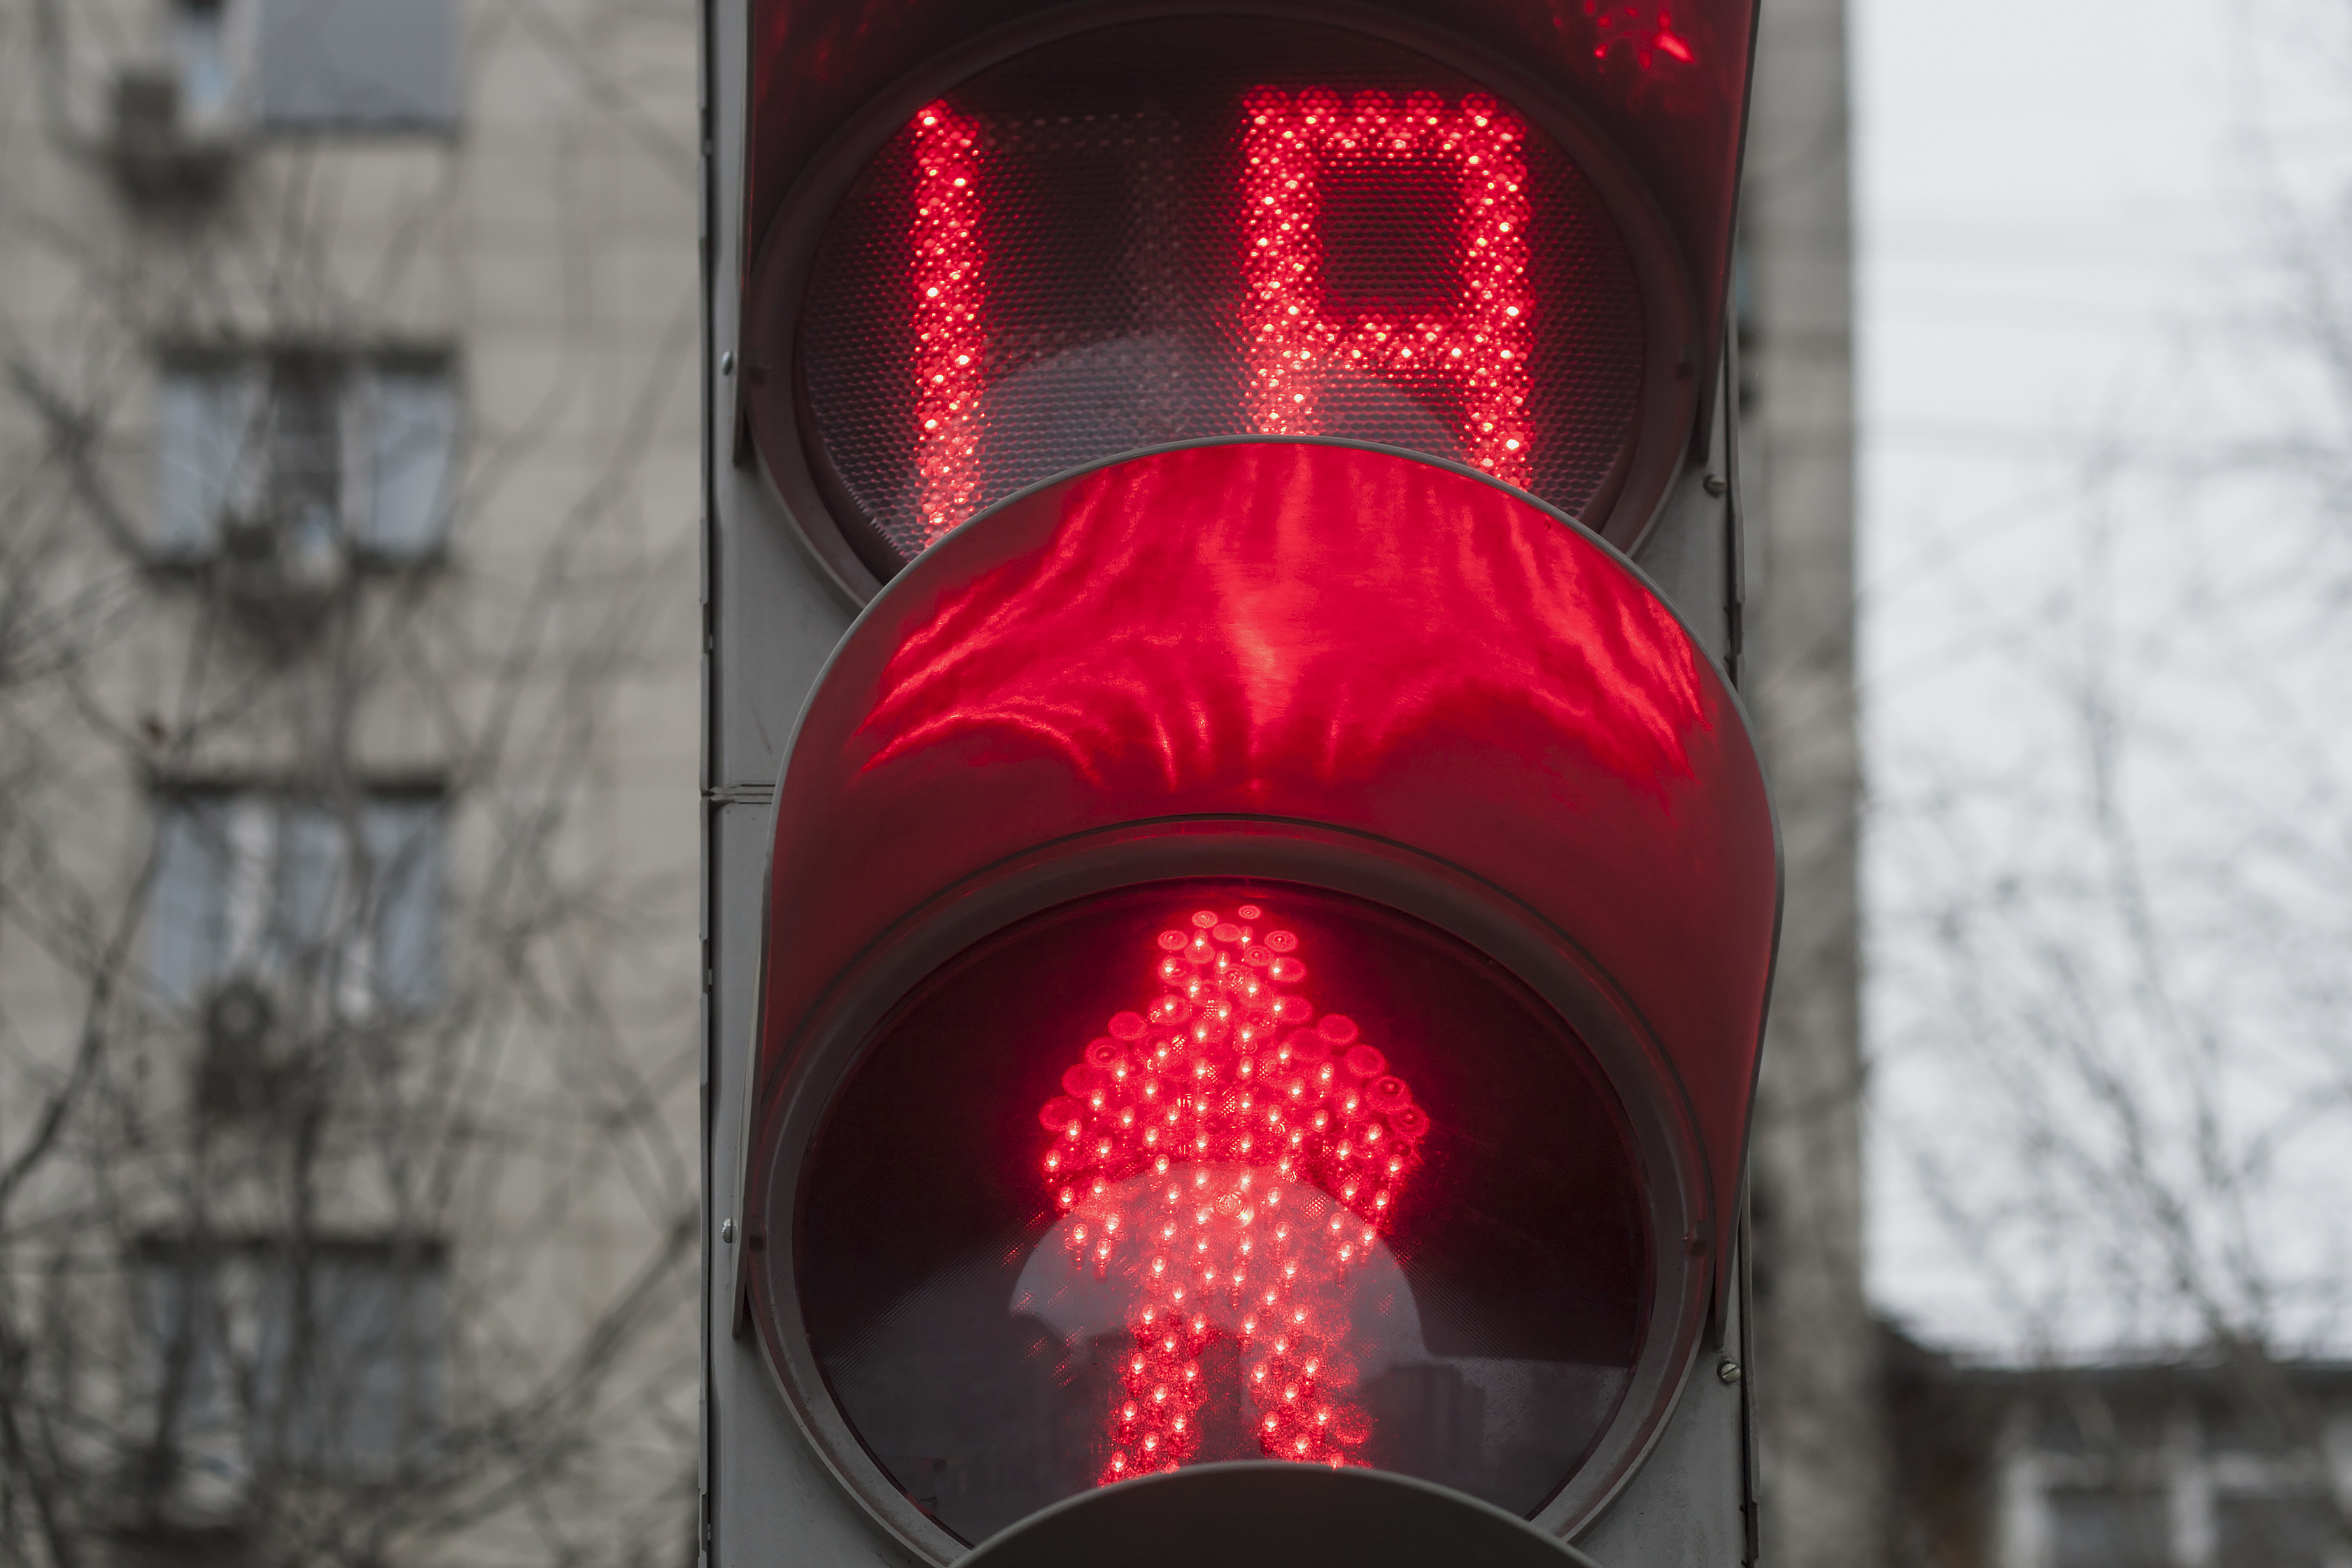 Traffic light red. Красный светофор. Красный сигнал светофора. Пешеходный светофор. Красный цвет светофора.